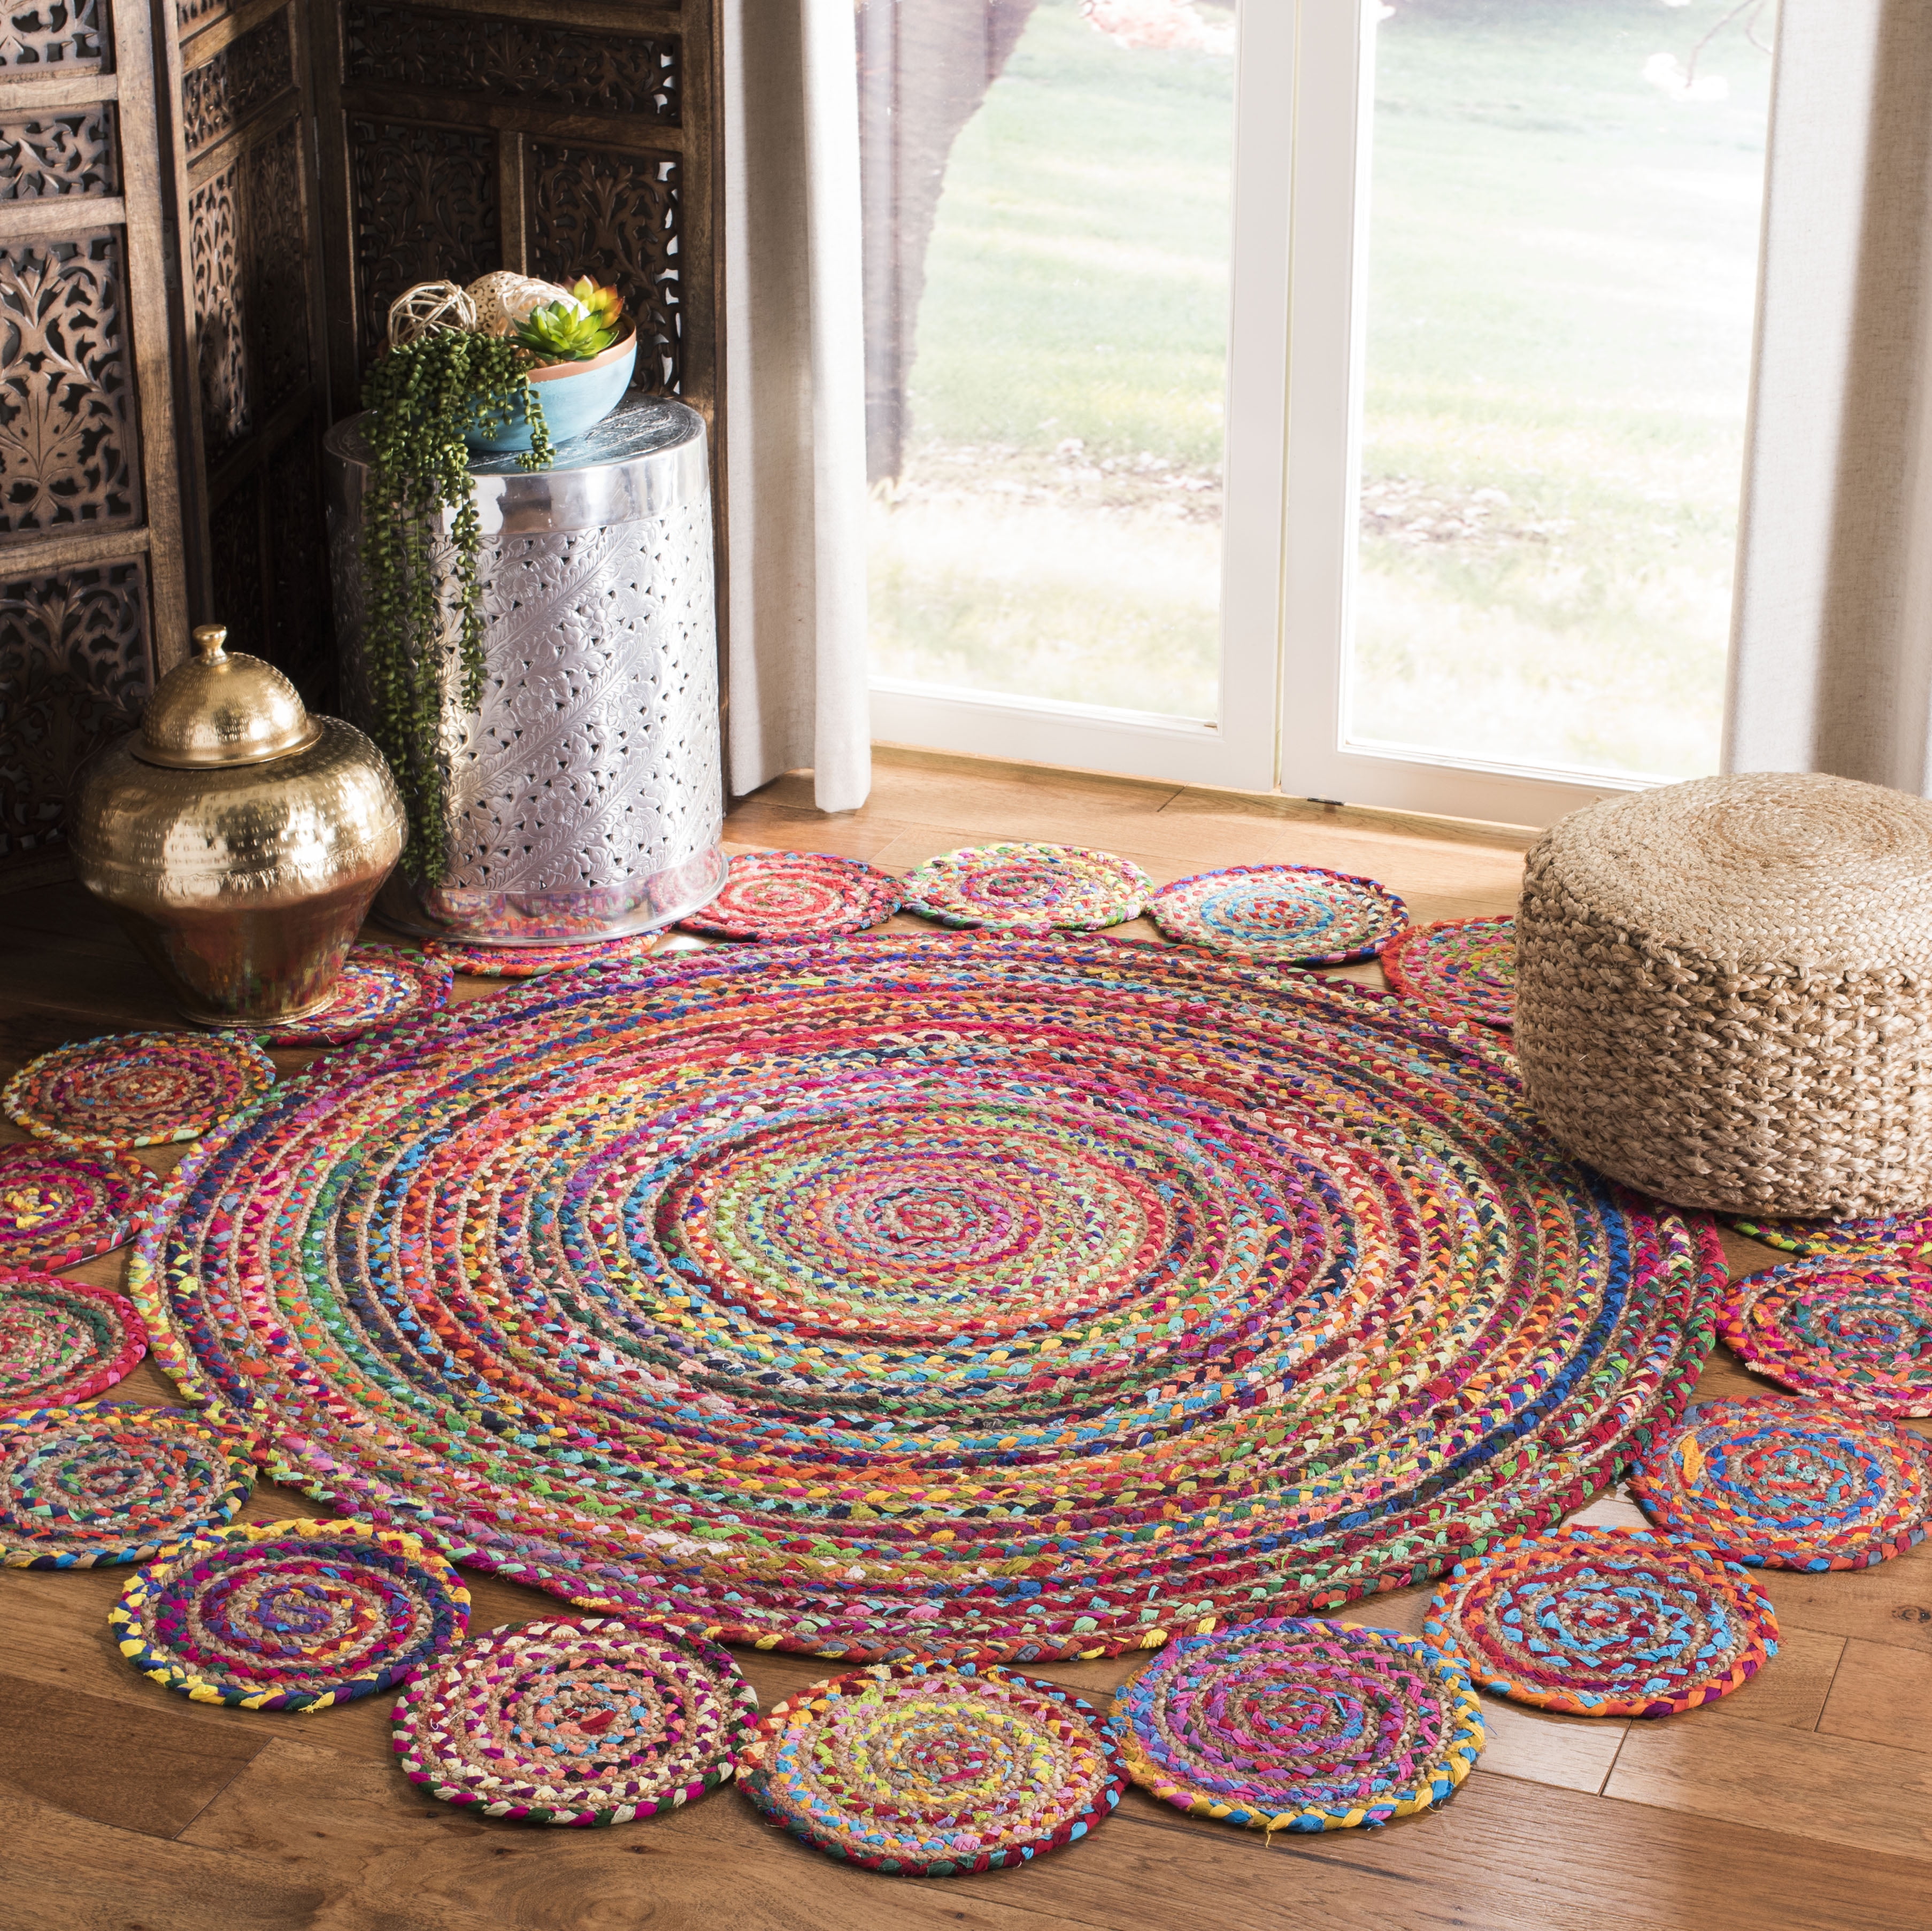 Details about   Indian Handmade Jute&Cotton Round Floor Rug Yoga Mat Carpet Bohemian Home Decor 